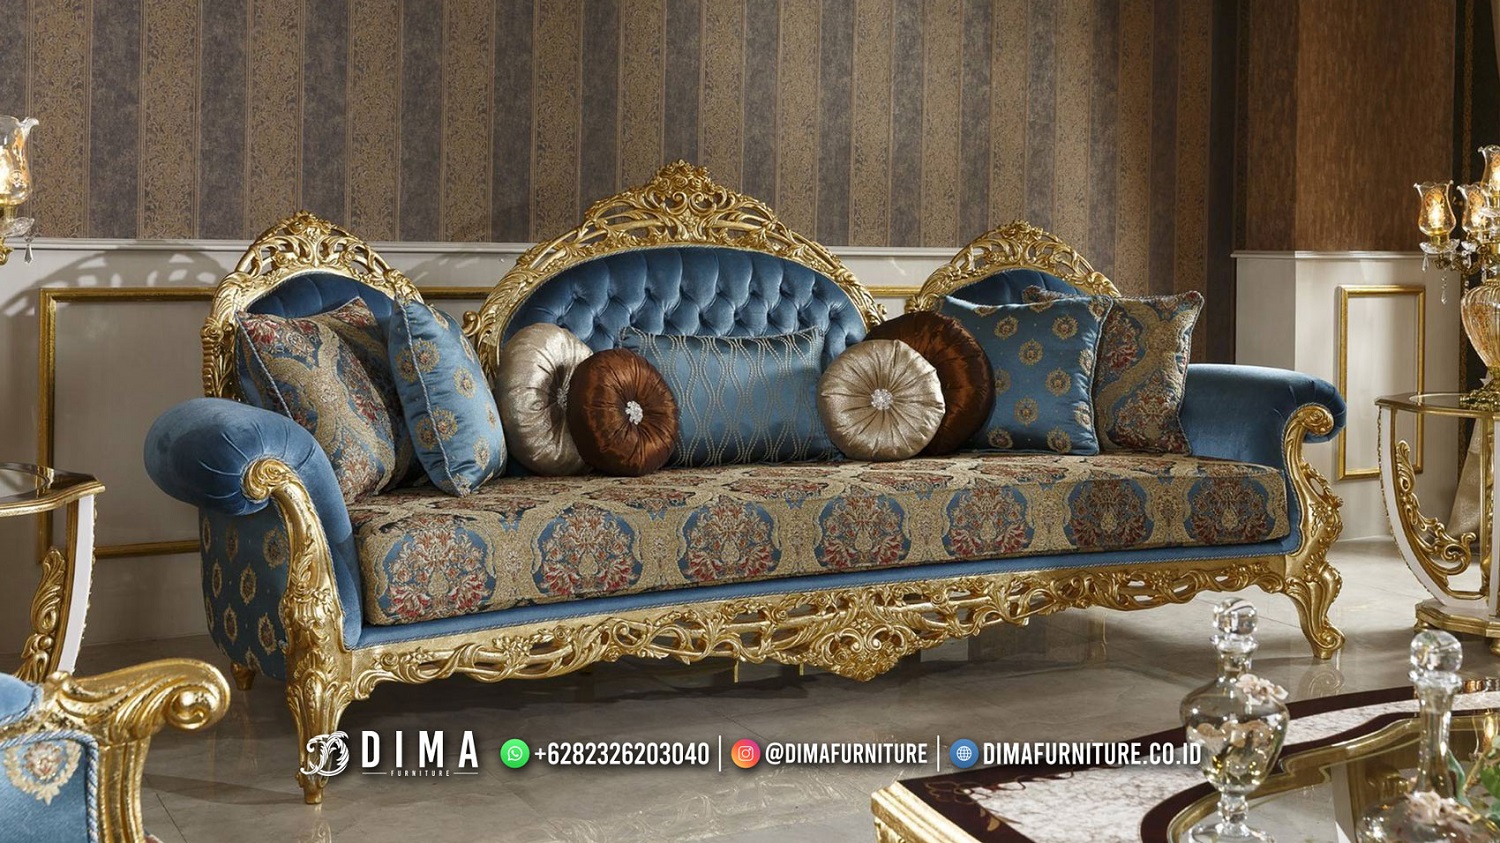 Jual Sofa Ruang Tamu Ukiran Mewah Jakarta Furniture Modern BT-1828